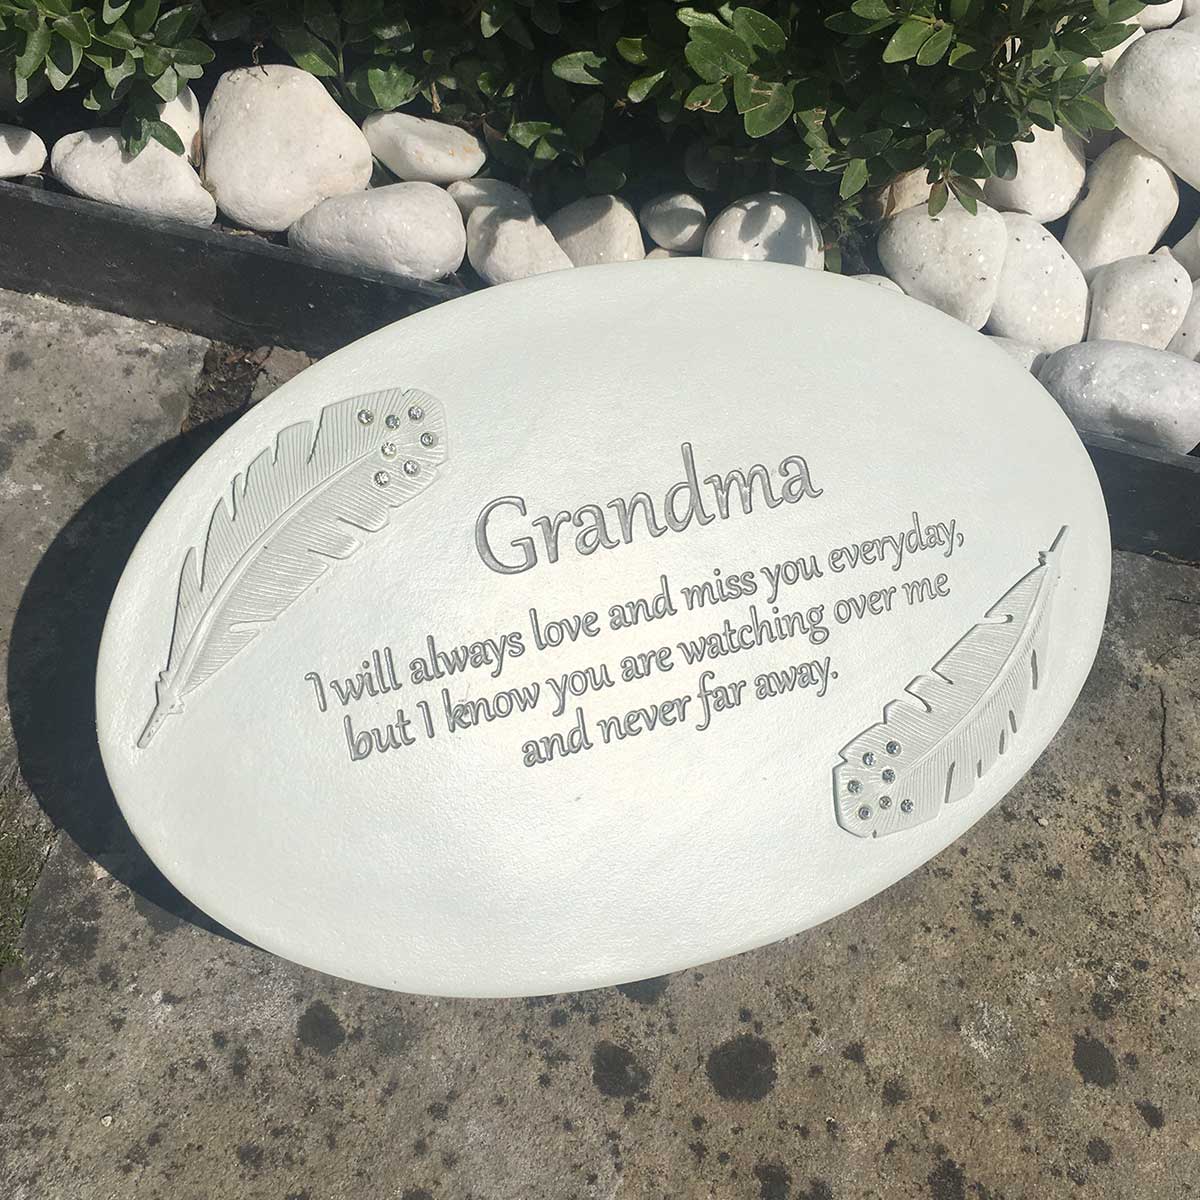 Cream Oval Resin Memorial Plaque - Grandma